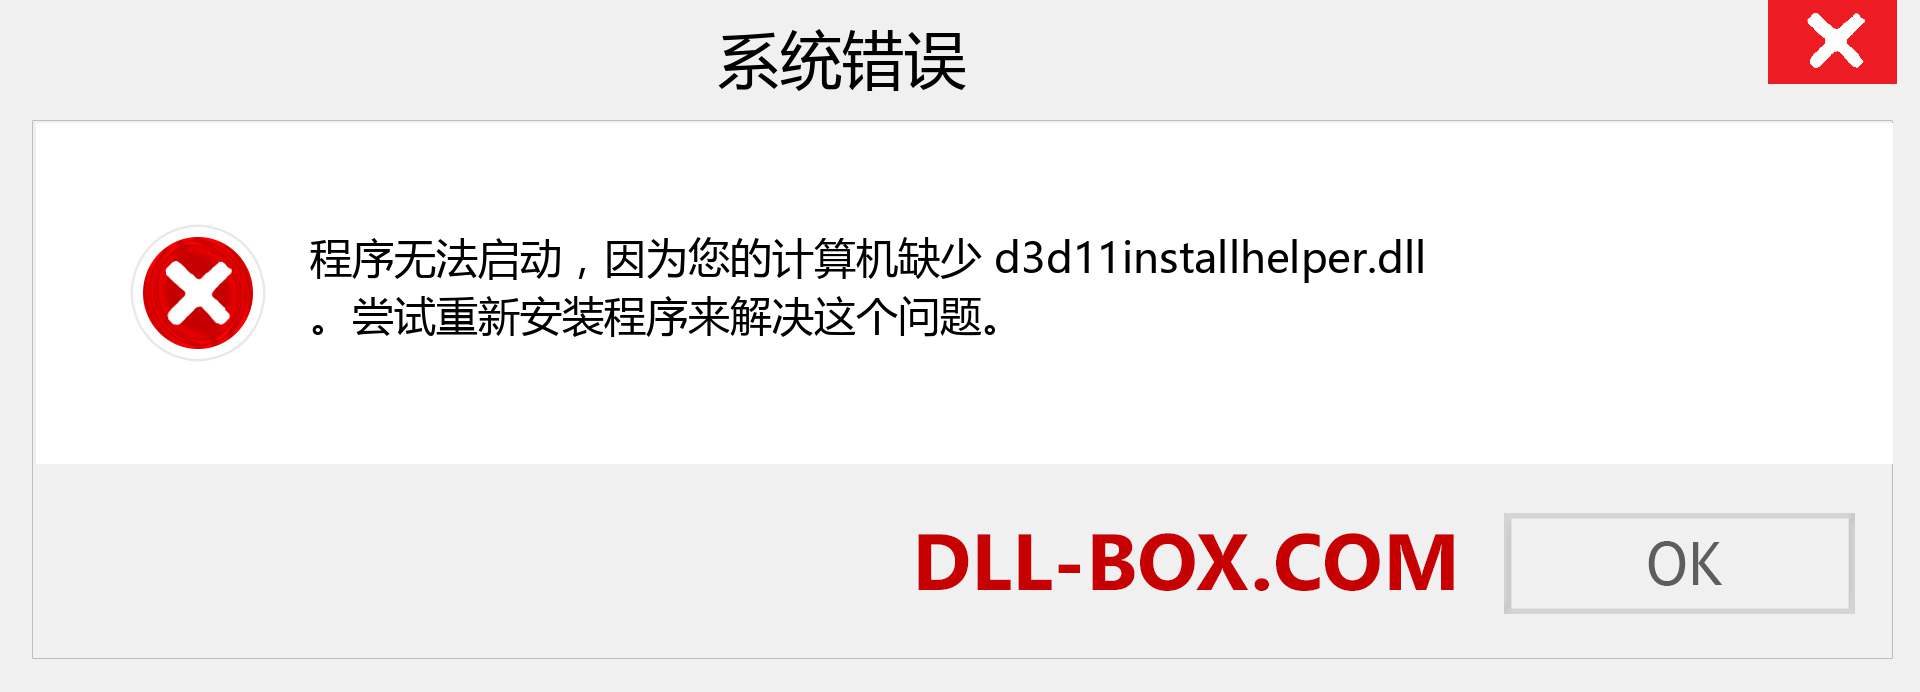 d3d11installhelper.dll 文件丢失？。 适用于 Windows 7、8、10 的下载 - 修复 Windows、照片、图像上的 d3d11installhelper dll 丢失错误